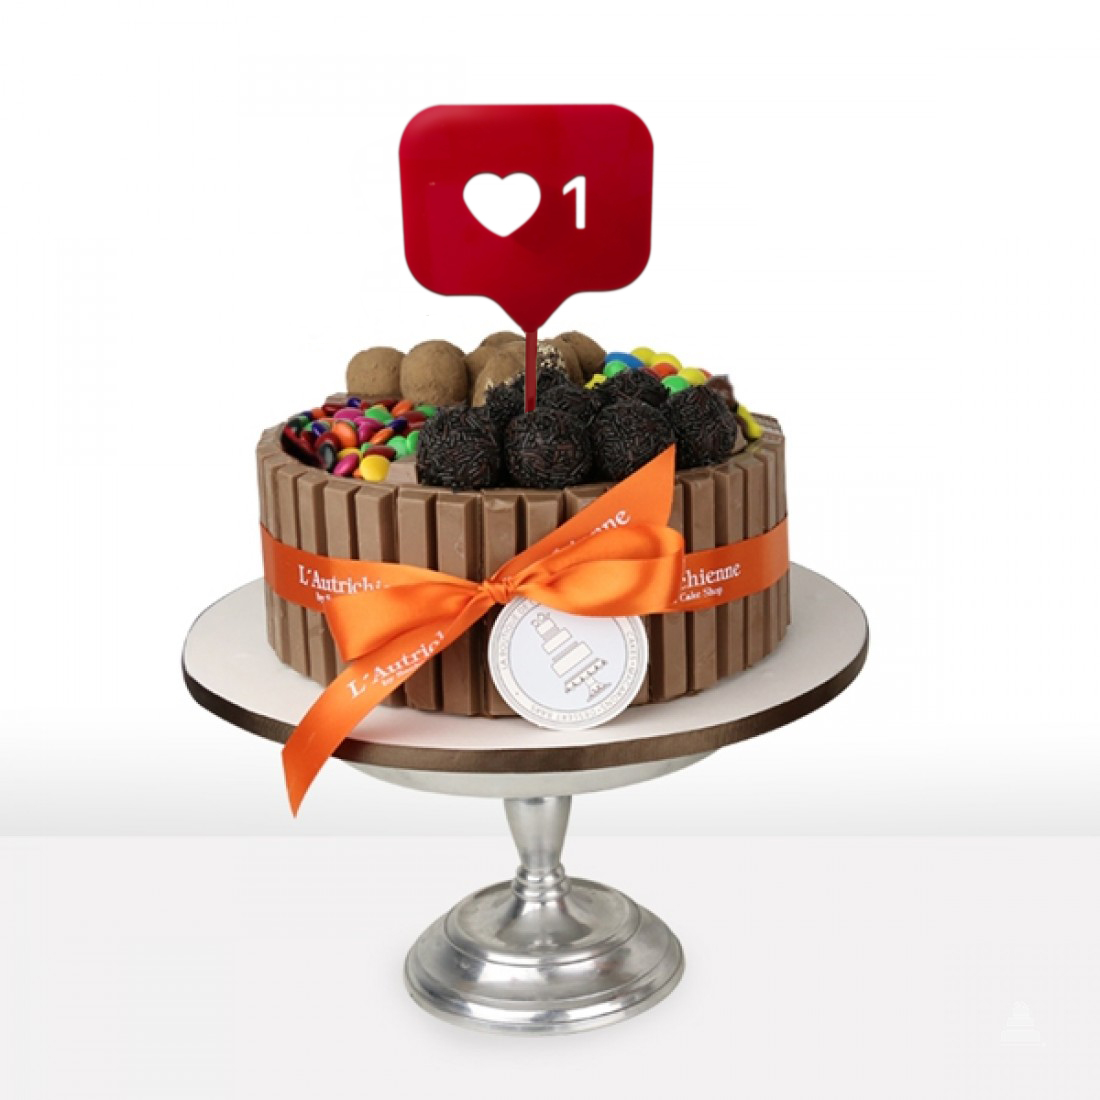 LOVE HEART KITKAT CAKE! pastel de chocolate kitkat para regalo de novios